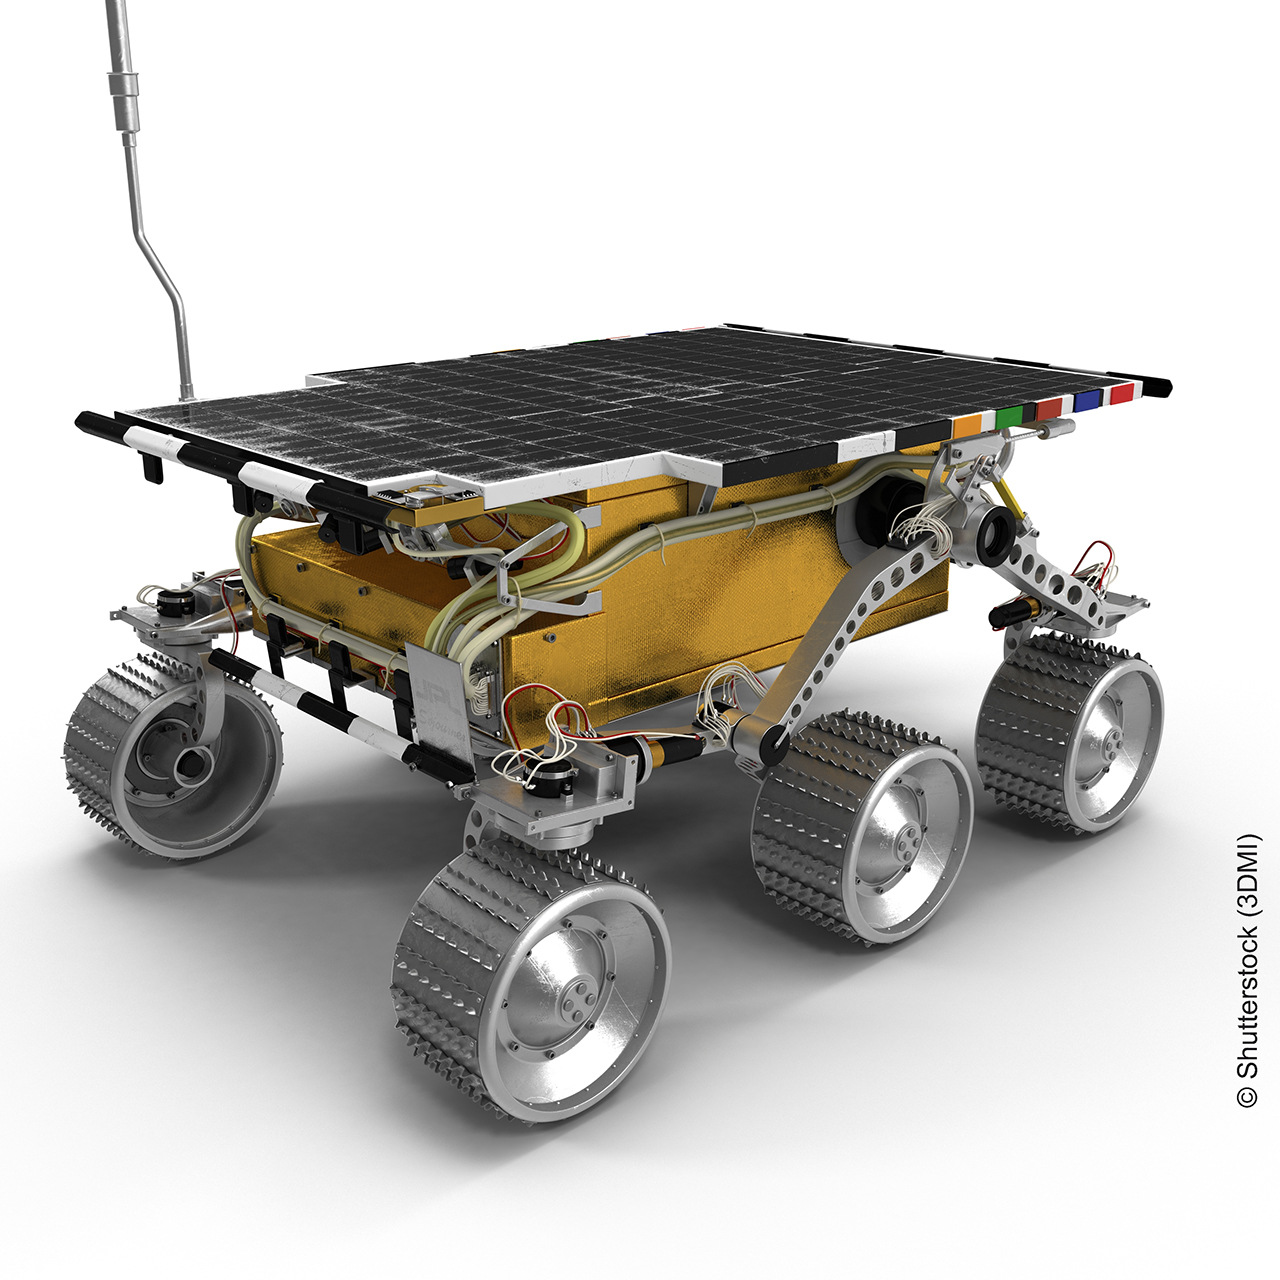 Mars Rover Sojourner 3D Illustration on White Background Isolated